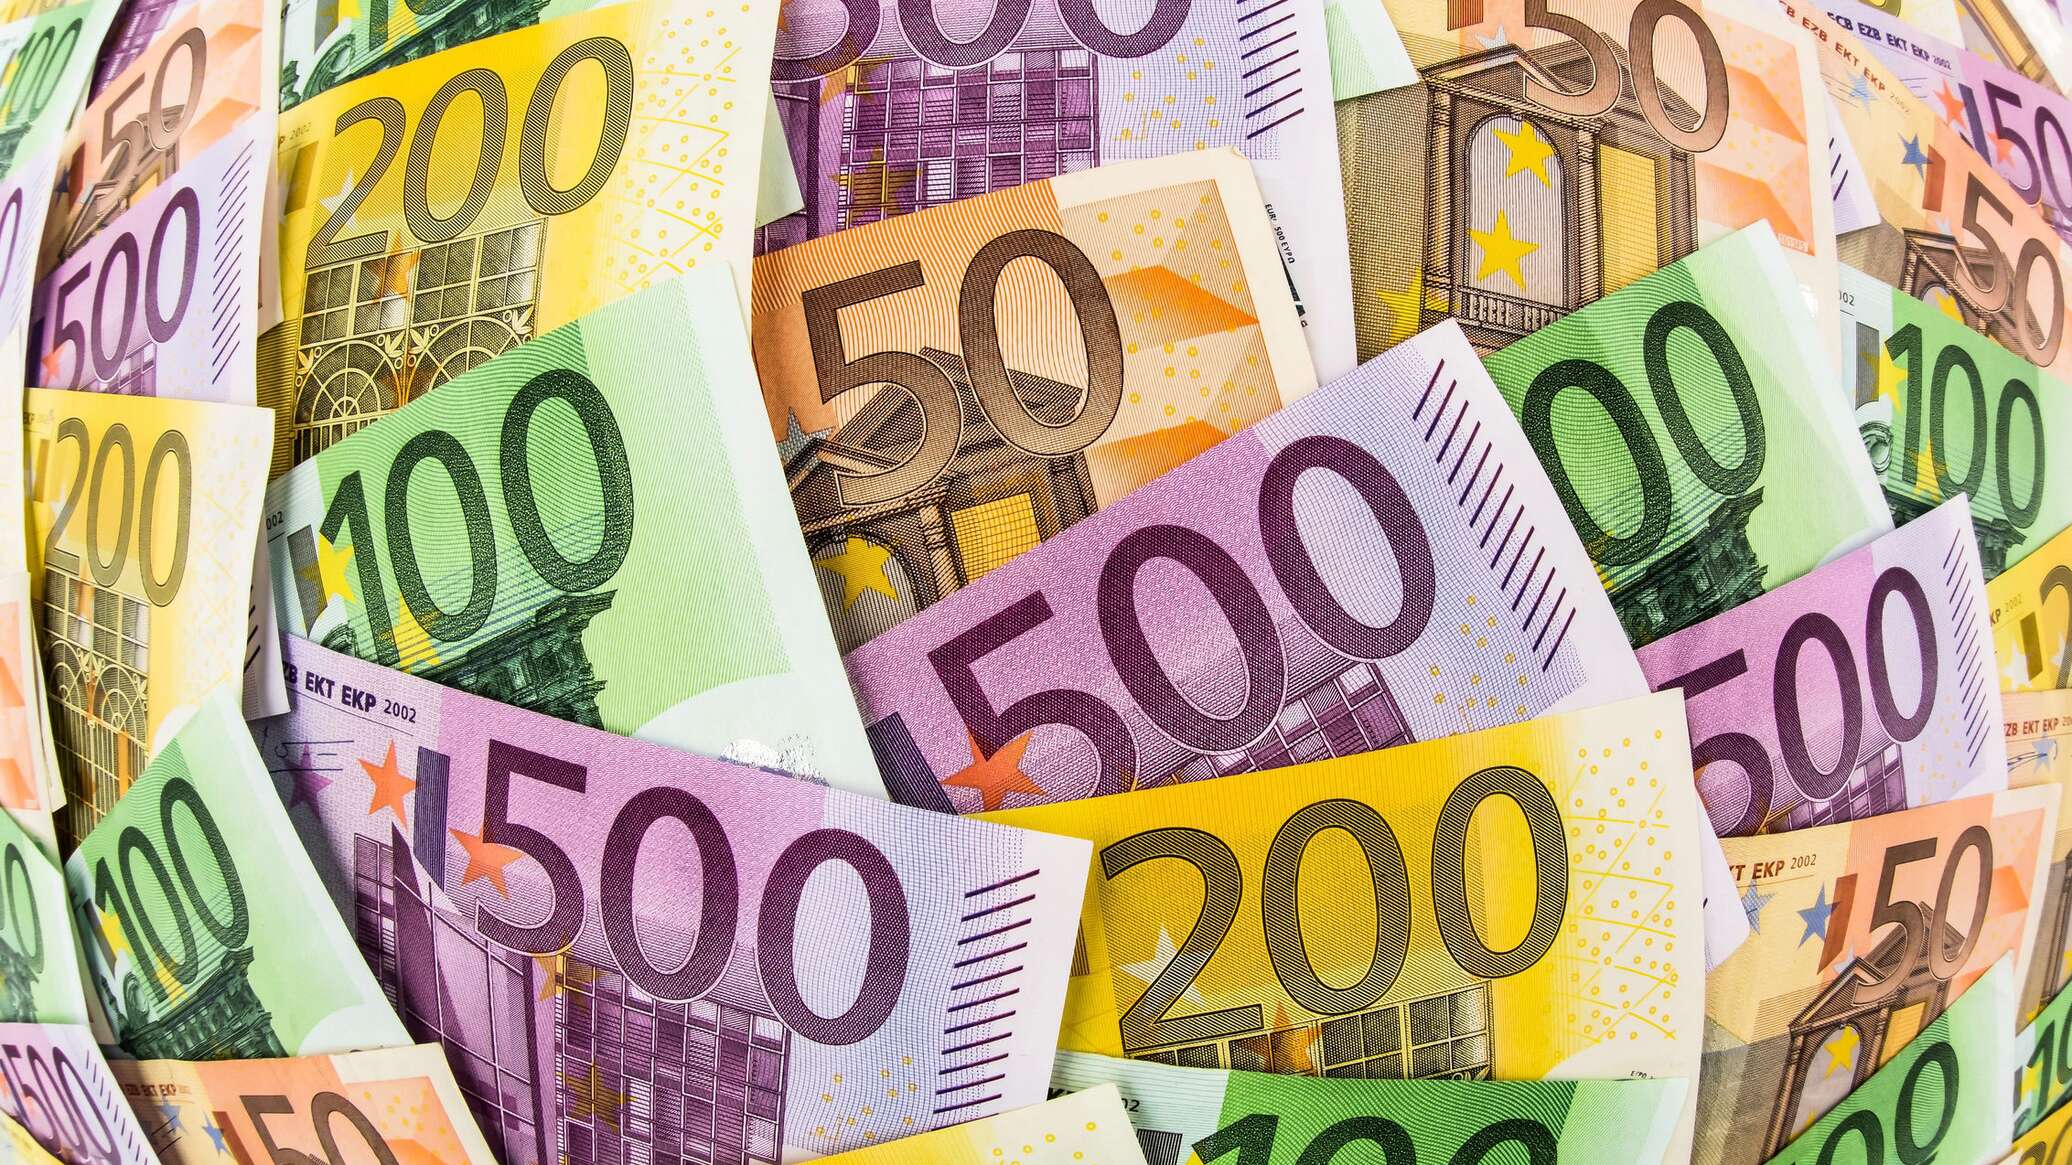 Размер евро купюры. Тысяча евро купюра. Банкнота 1000 евро. 100 Евро картинка. 1000000 Евро купюра.